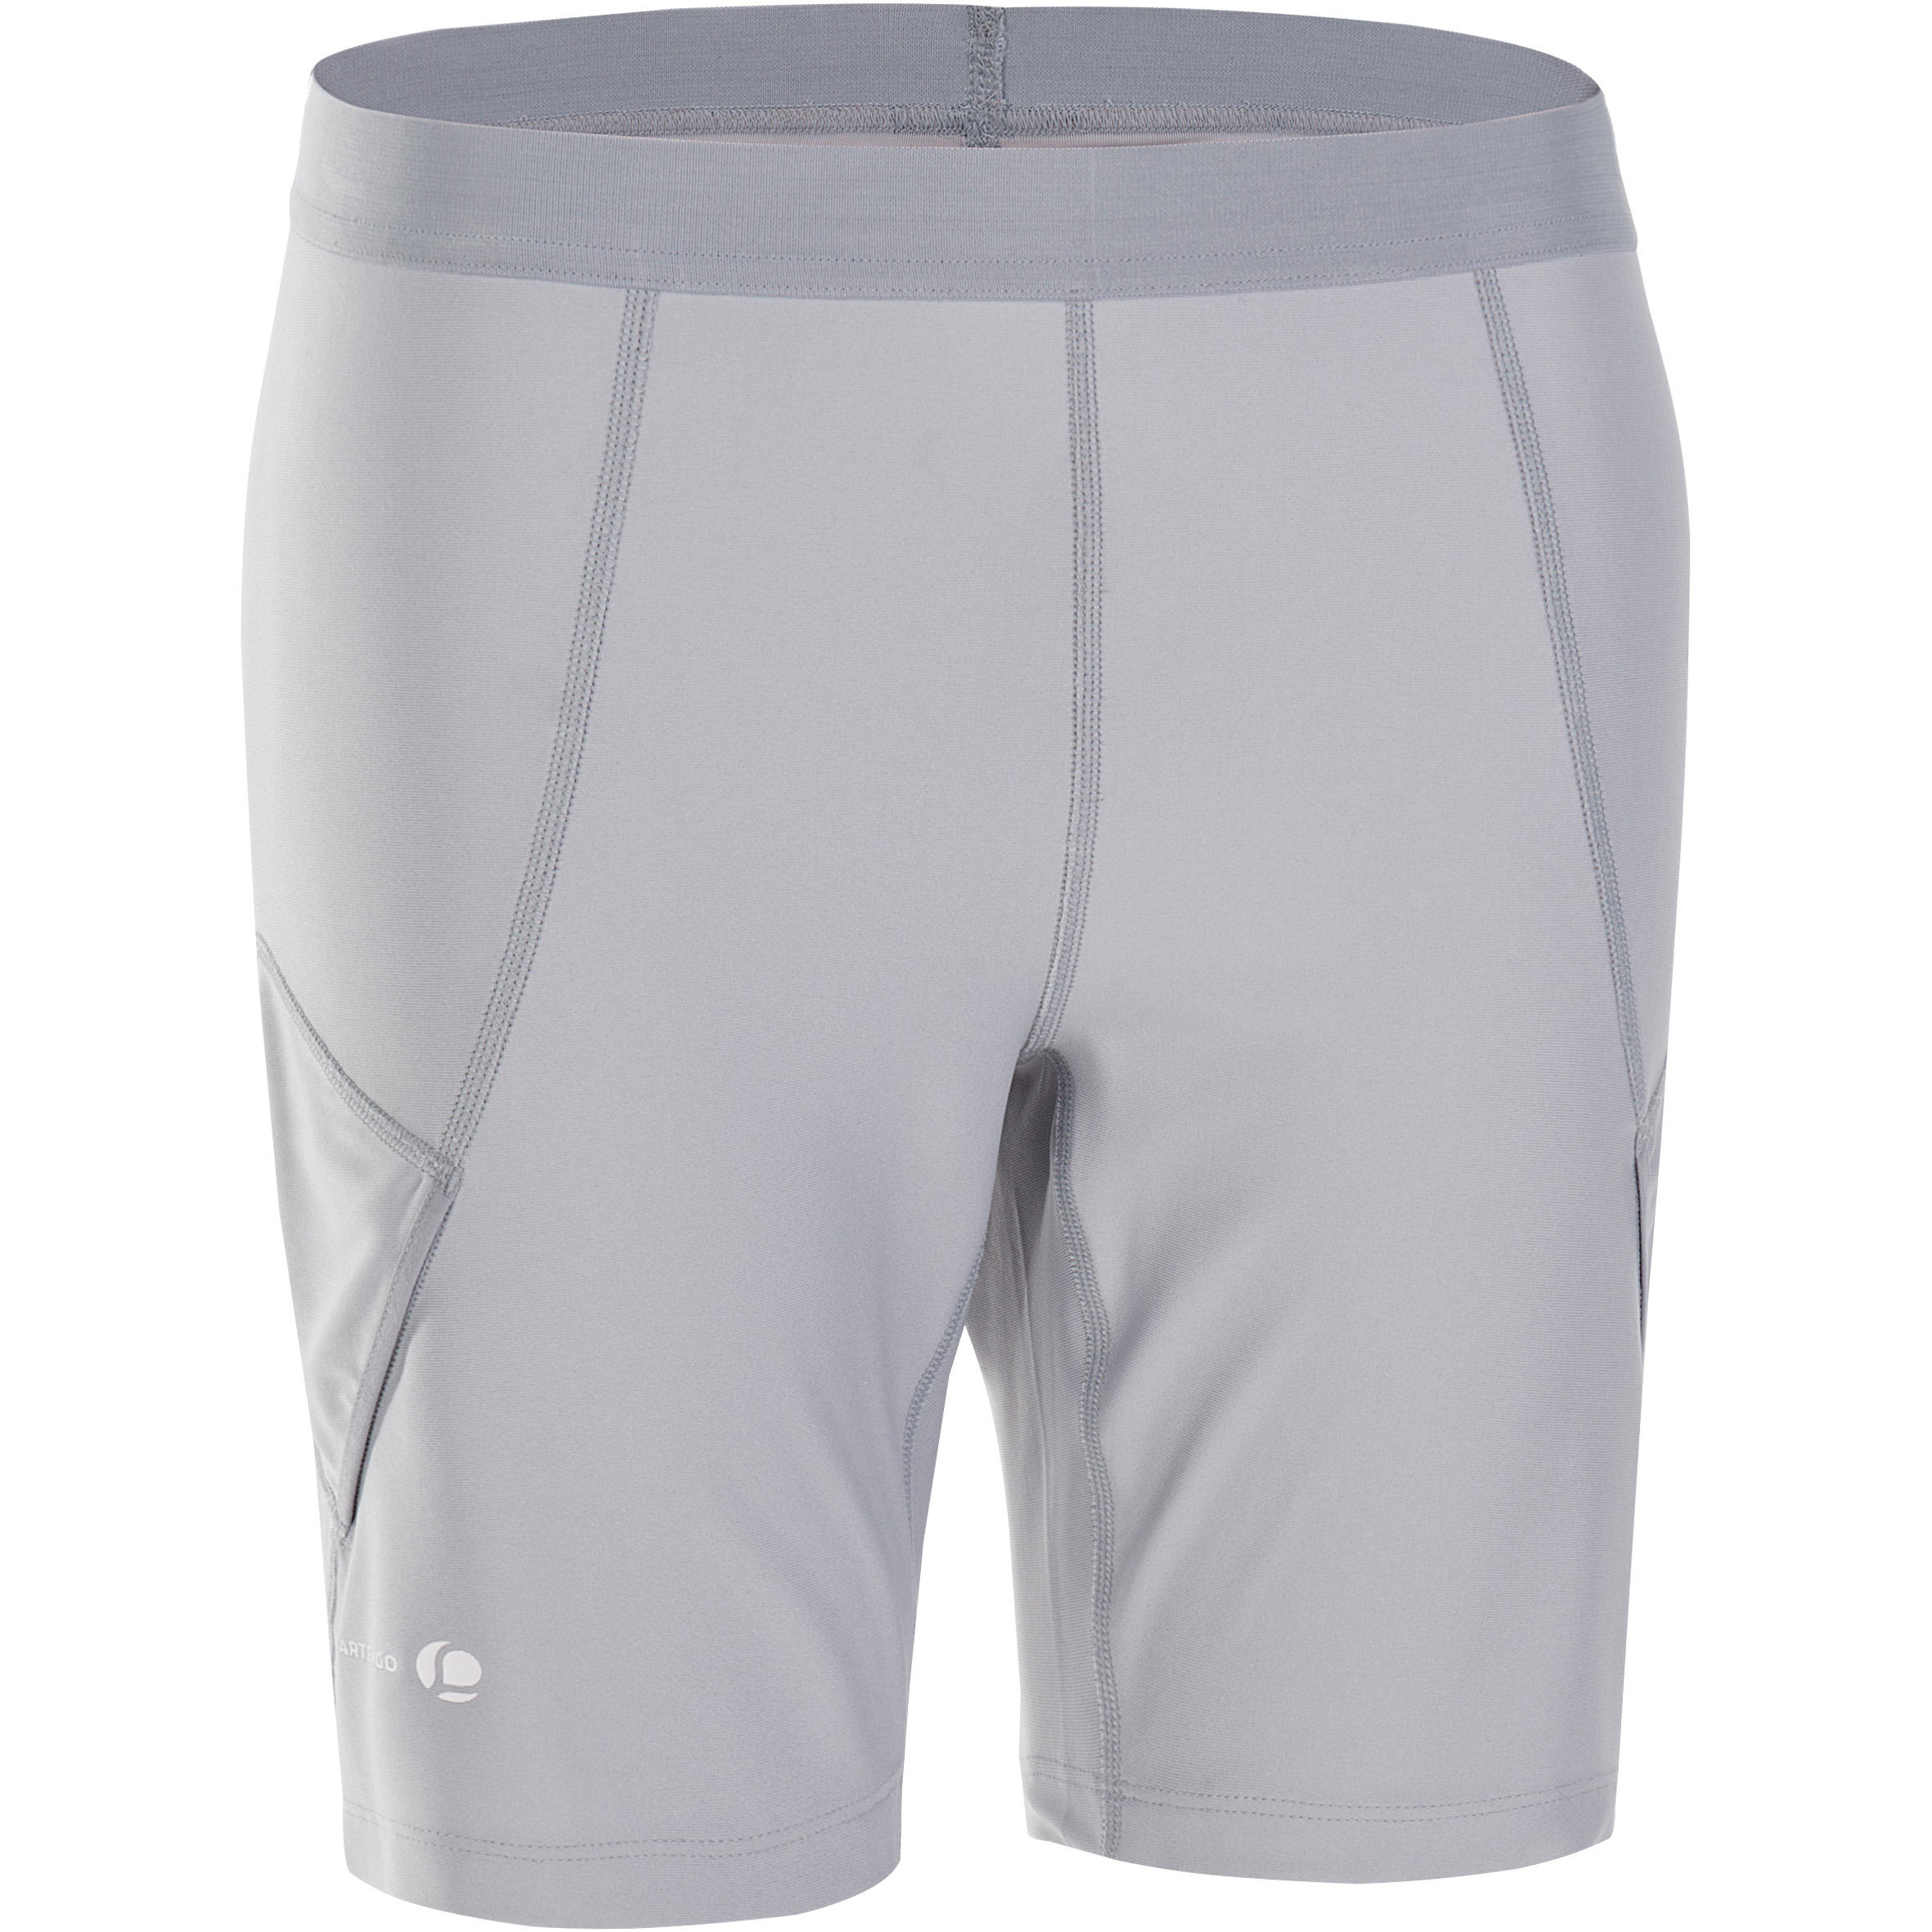 artengo badminton shorts